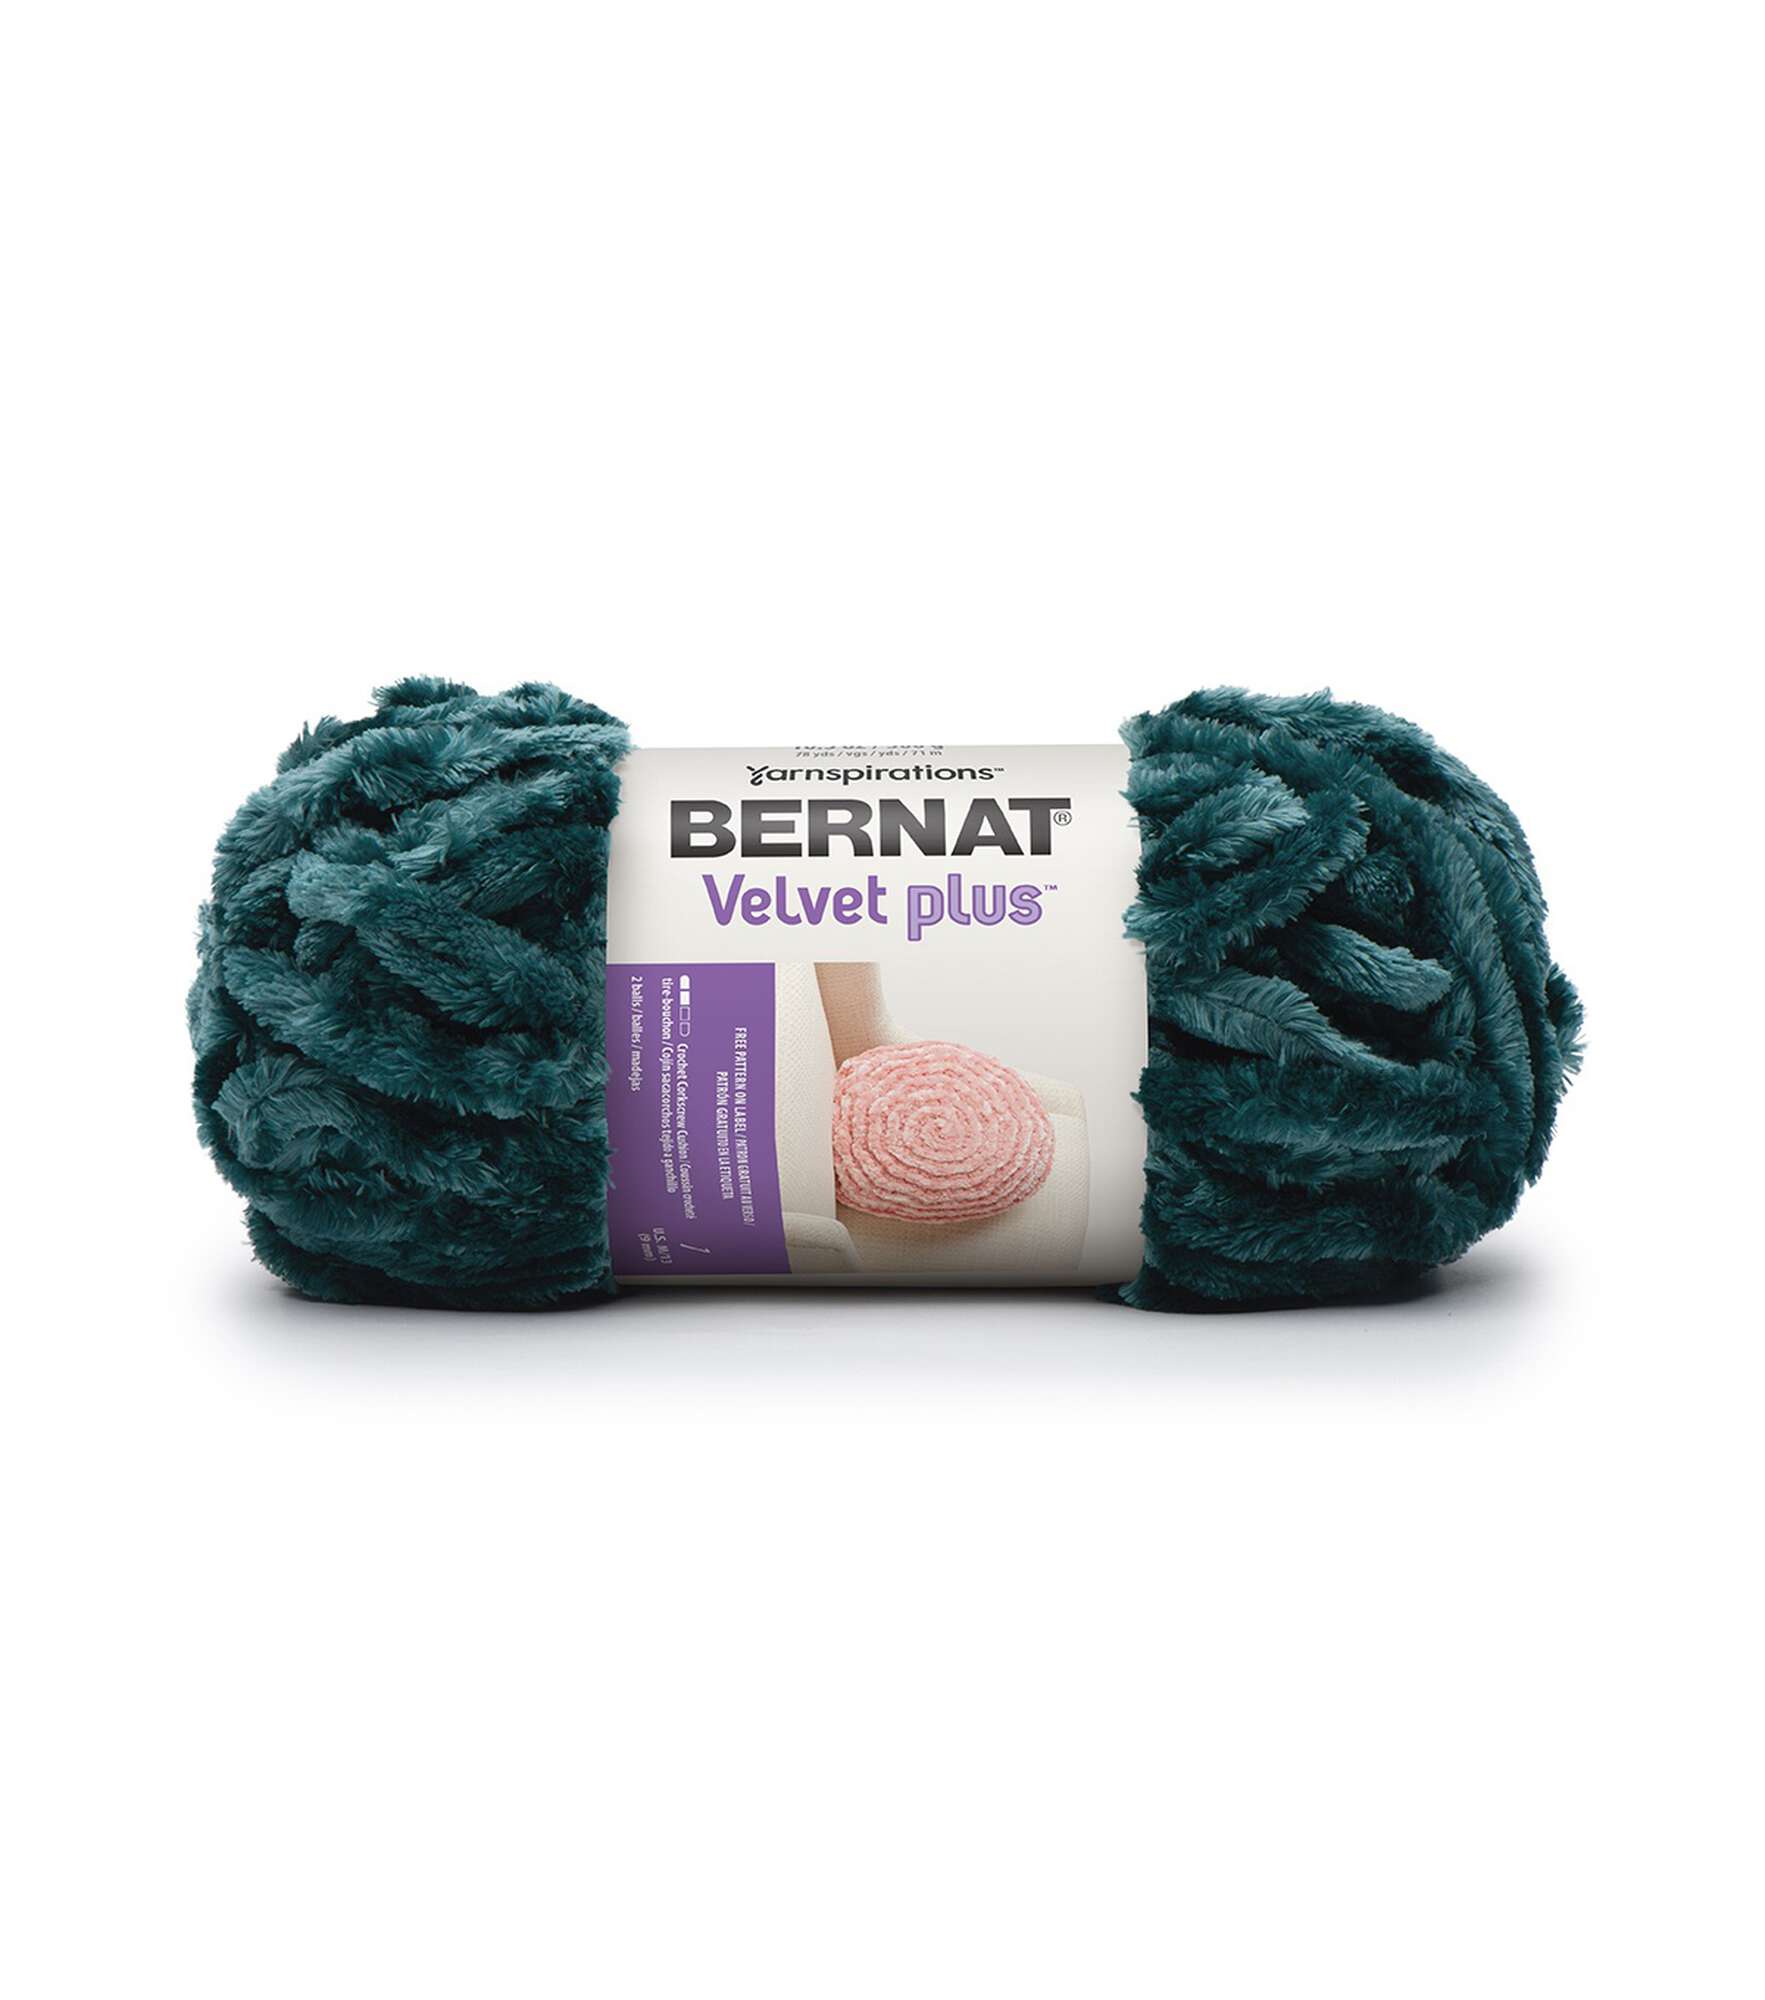 Bernat Velvet Plus Yarn - Clearance Shades*